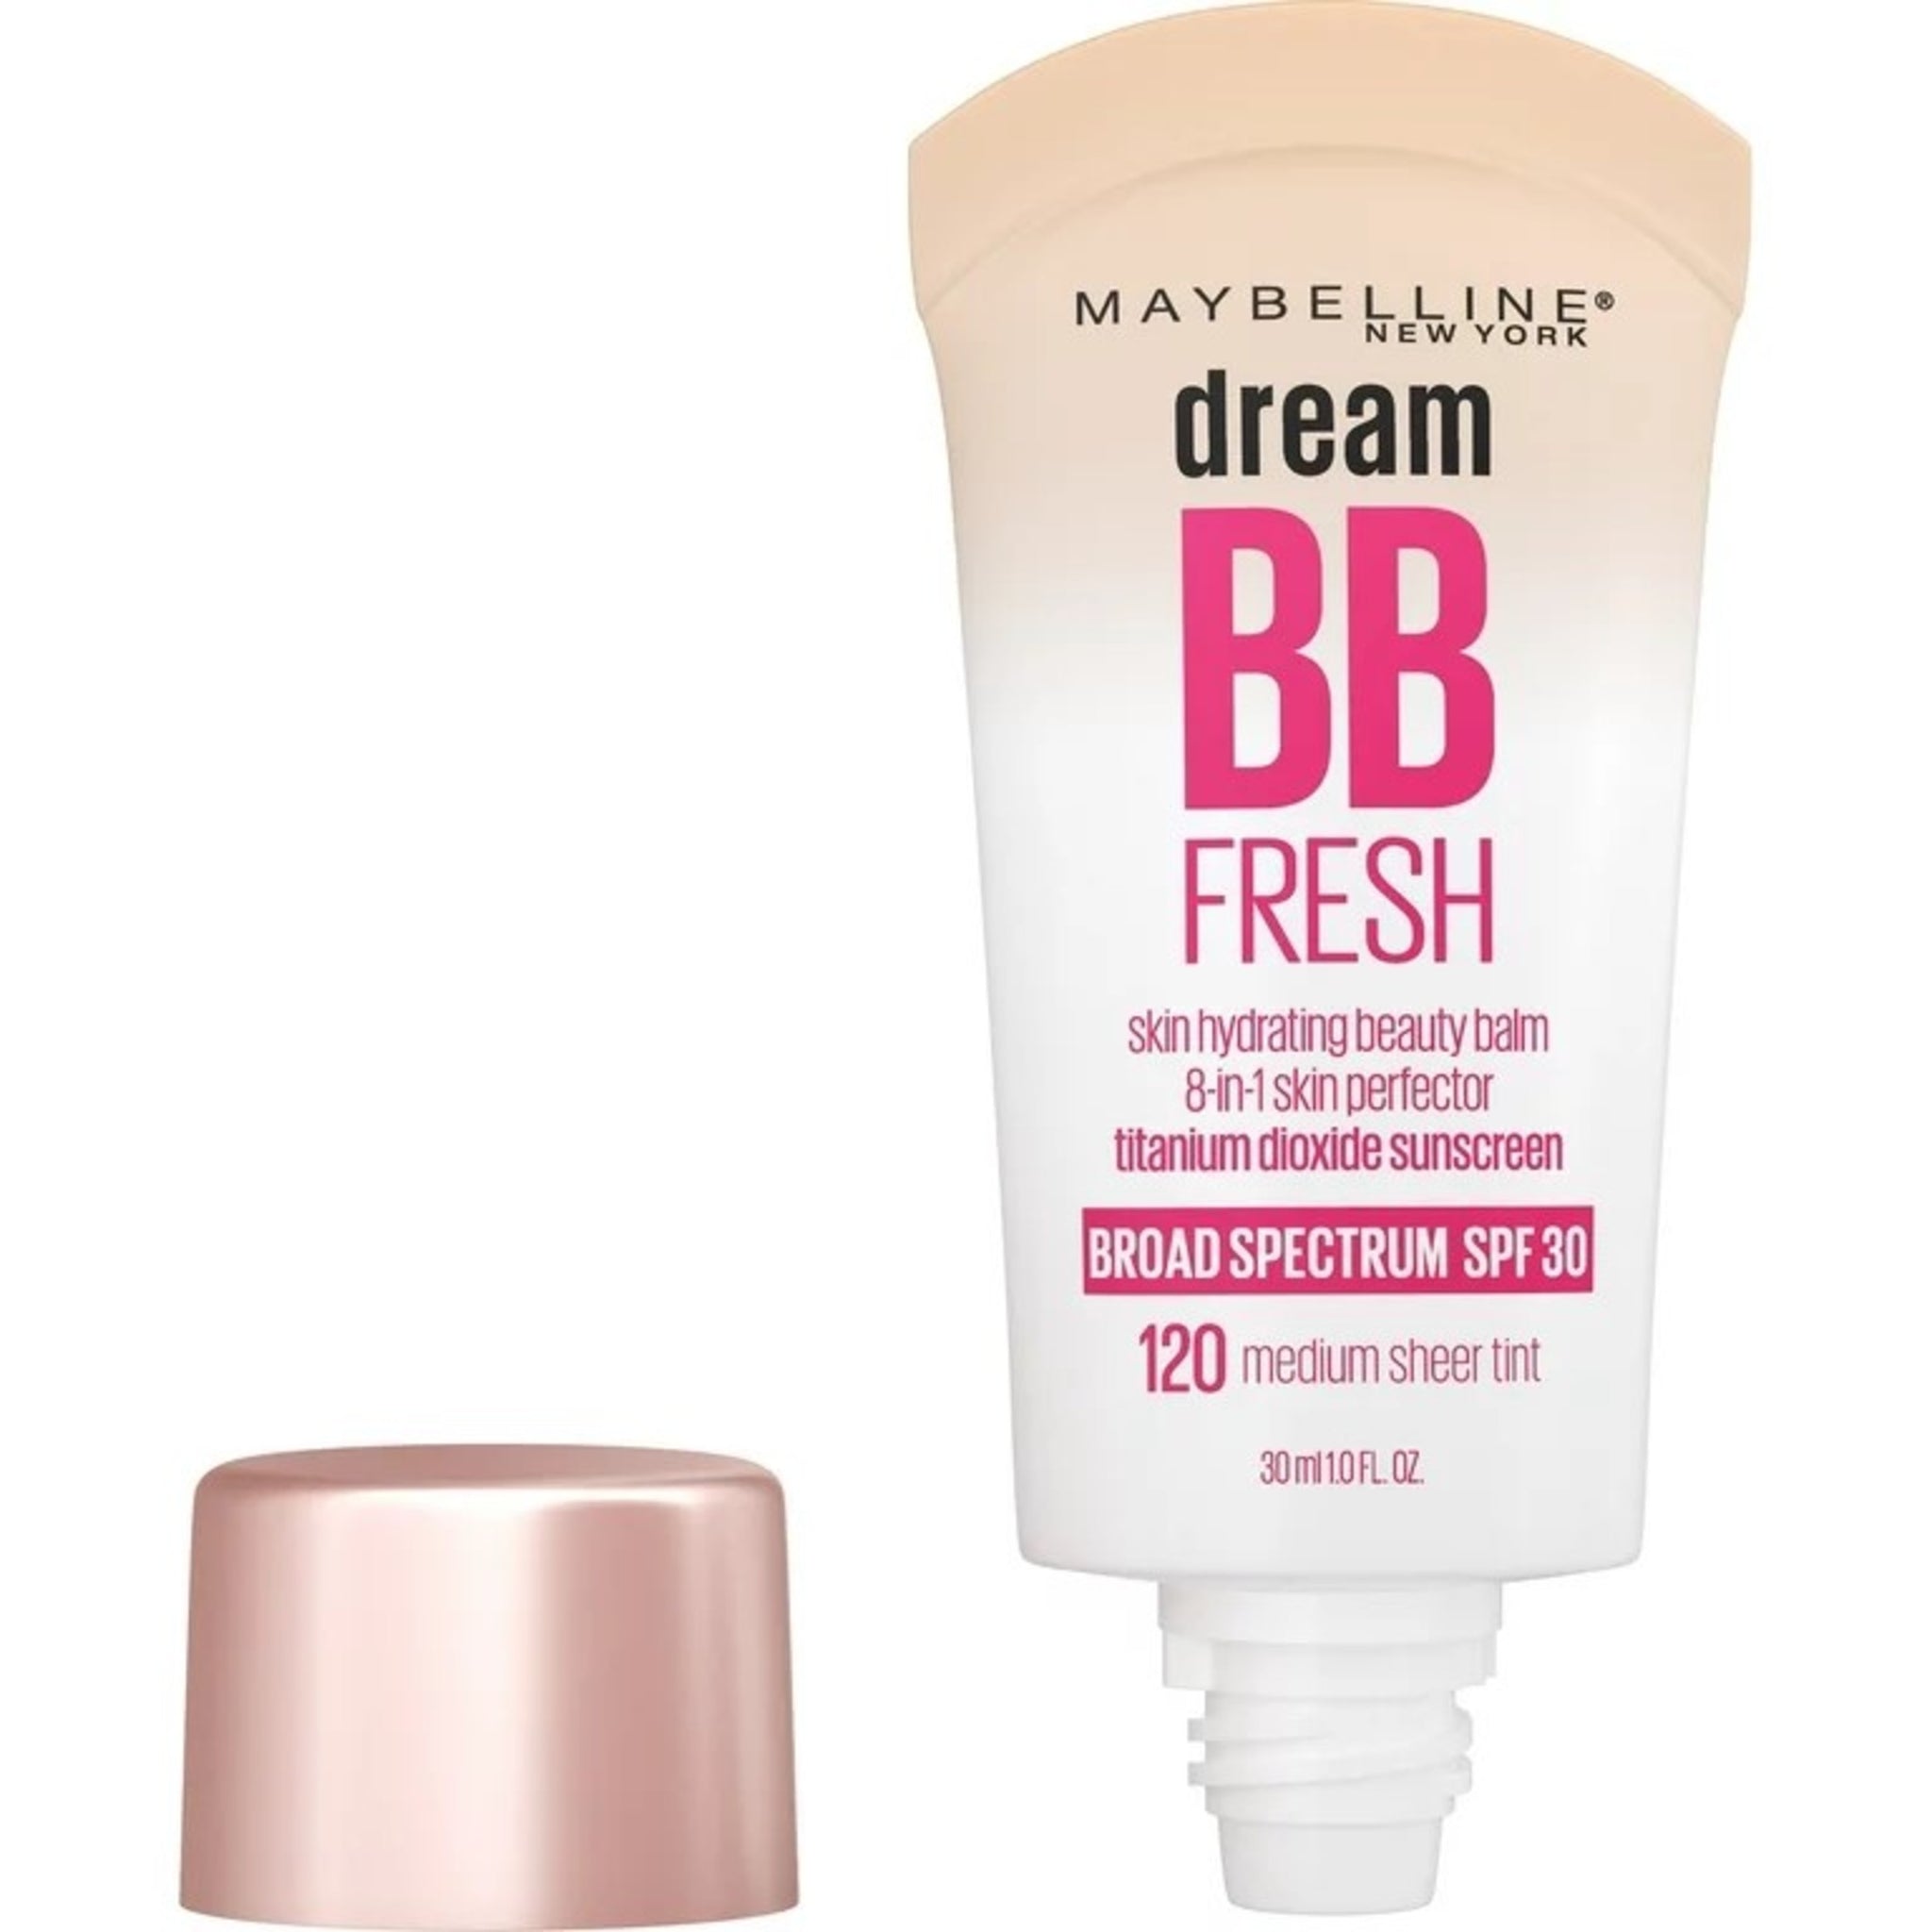 Dream BB Fresh 8-In-1 Beauty Balm SPF 30 Sheer Tint